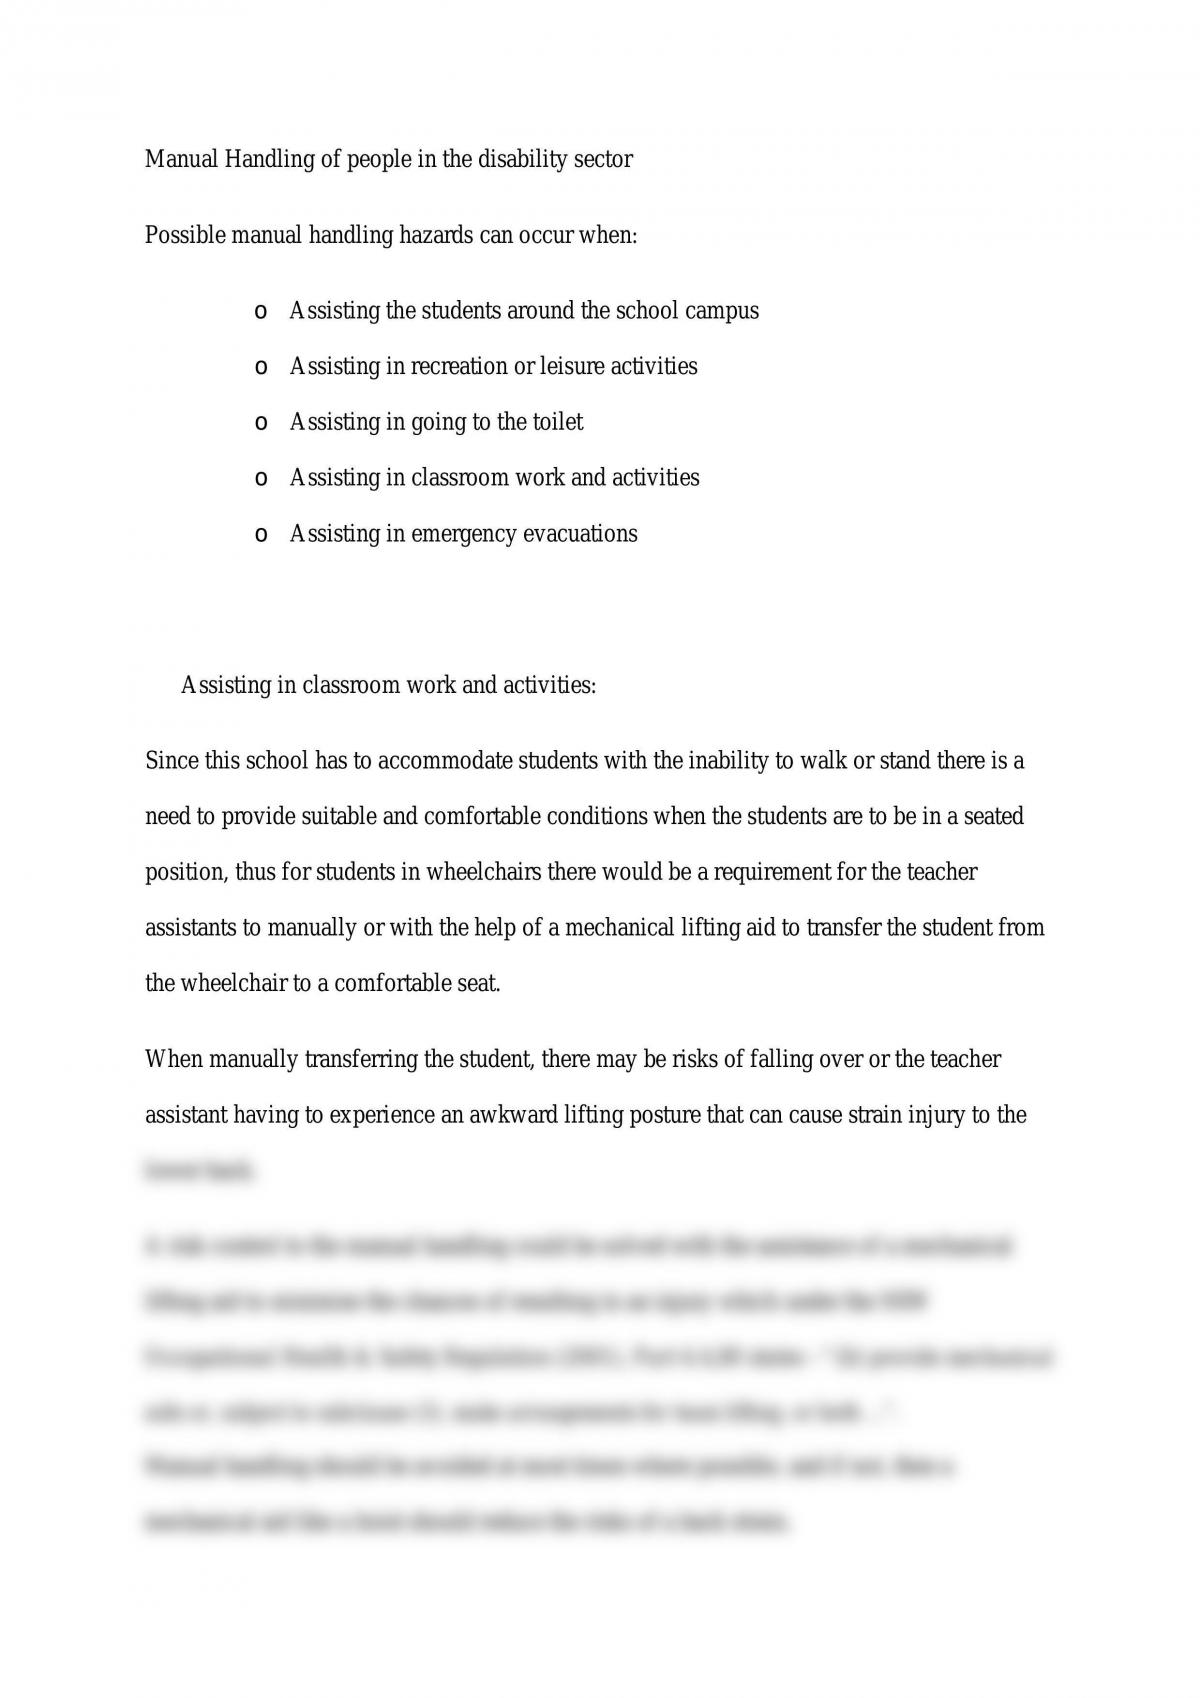 Manual Handling Notes - Page 1